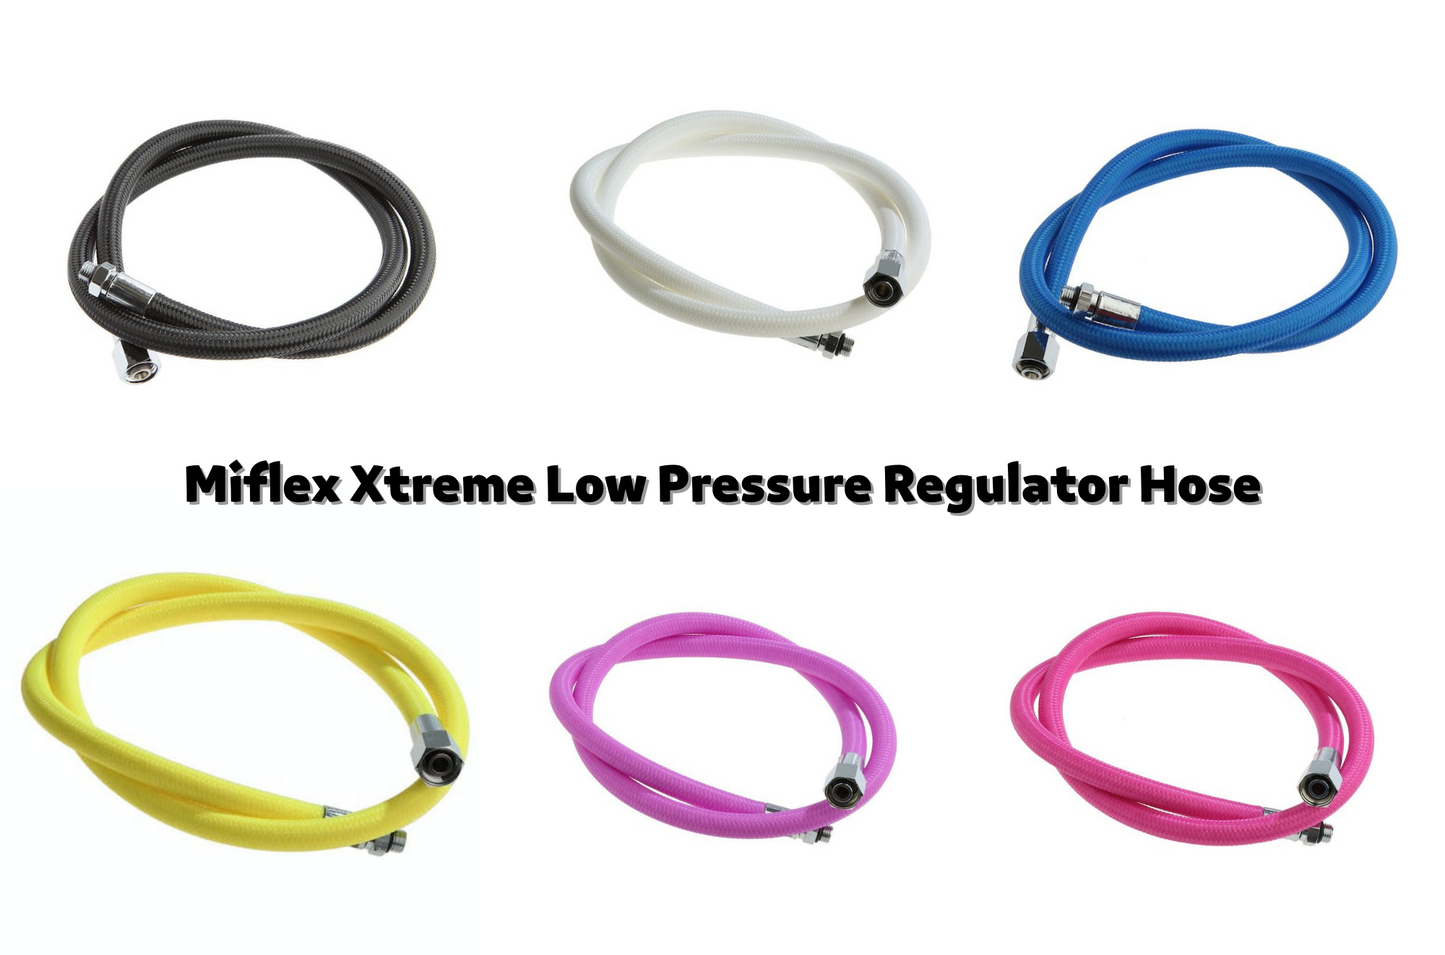 Miflex Xtreme Low Pressure Regulator Hose